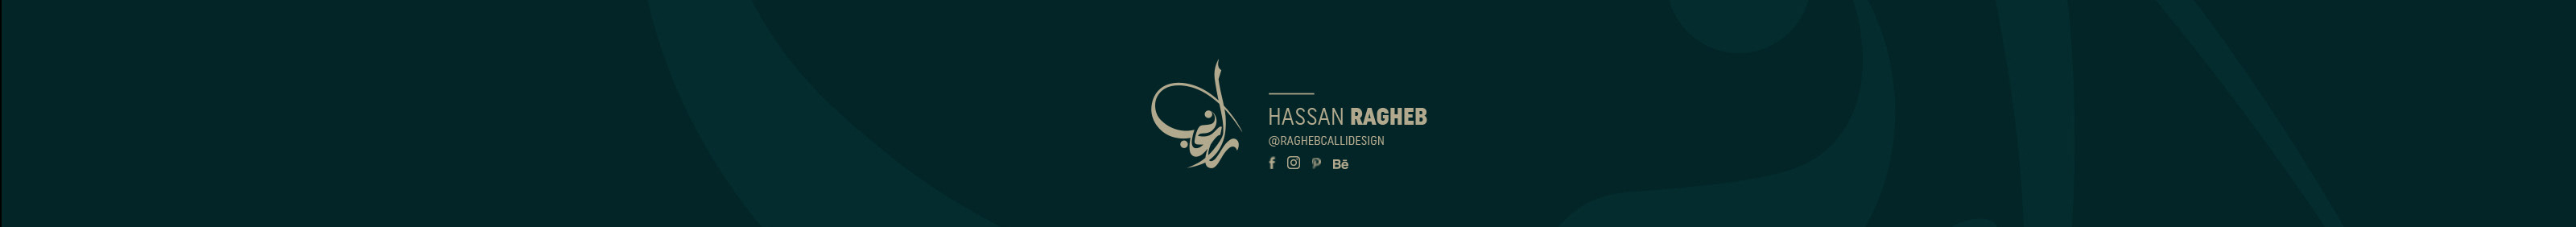 Hassan Ragheb's profile banner